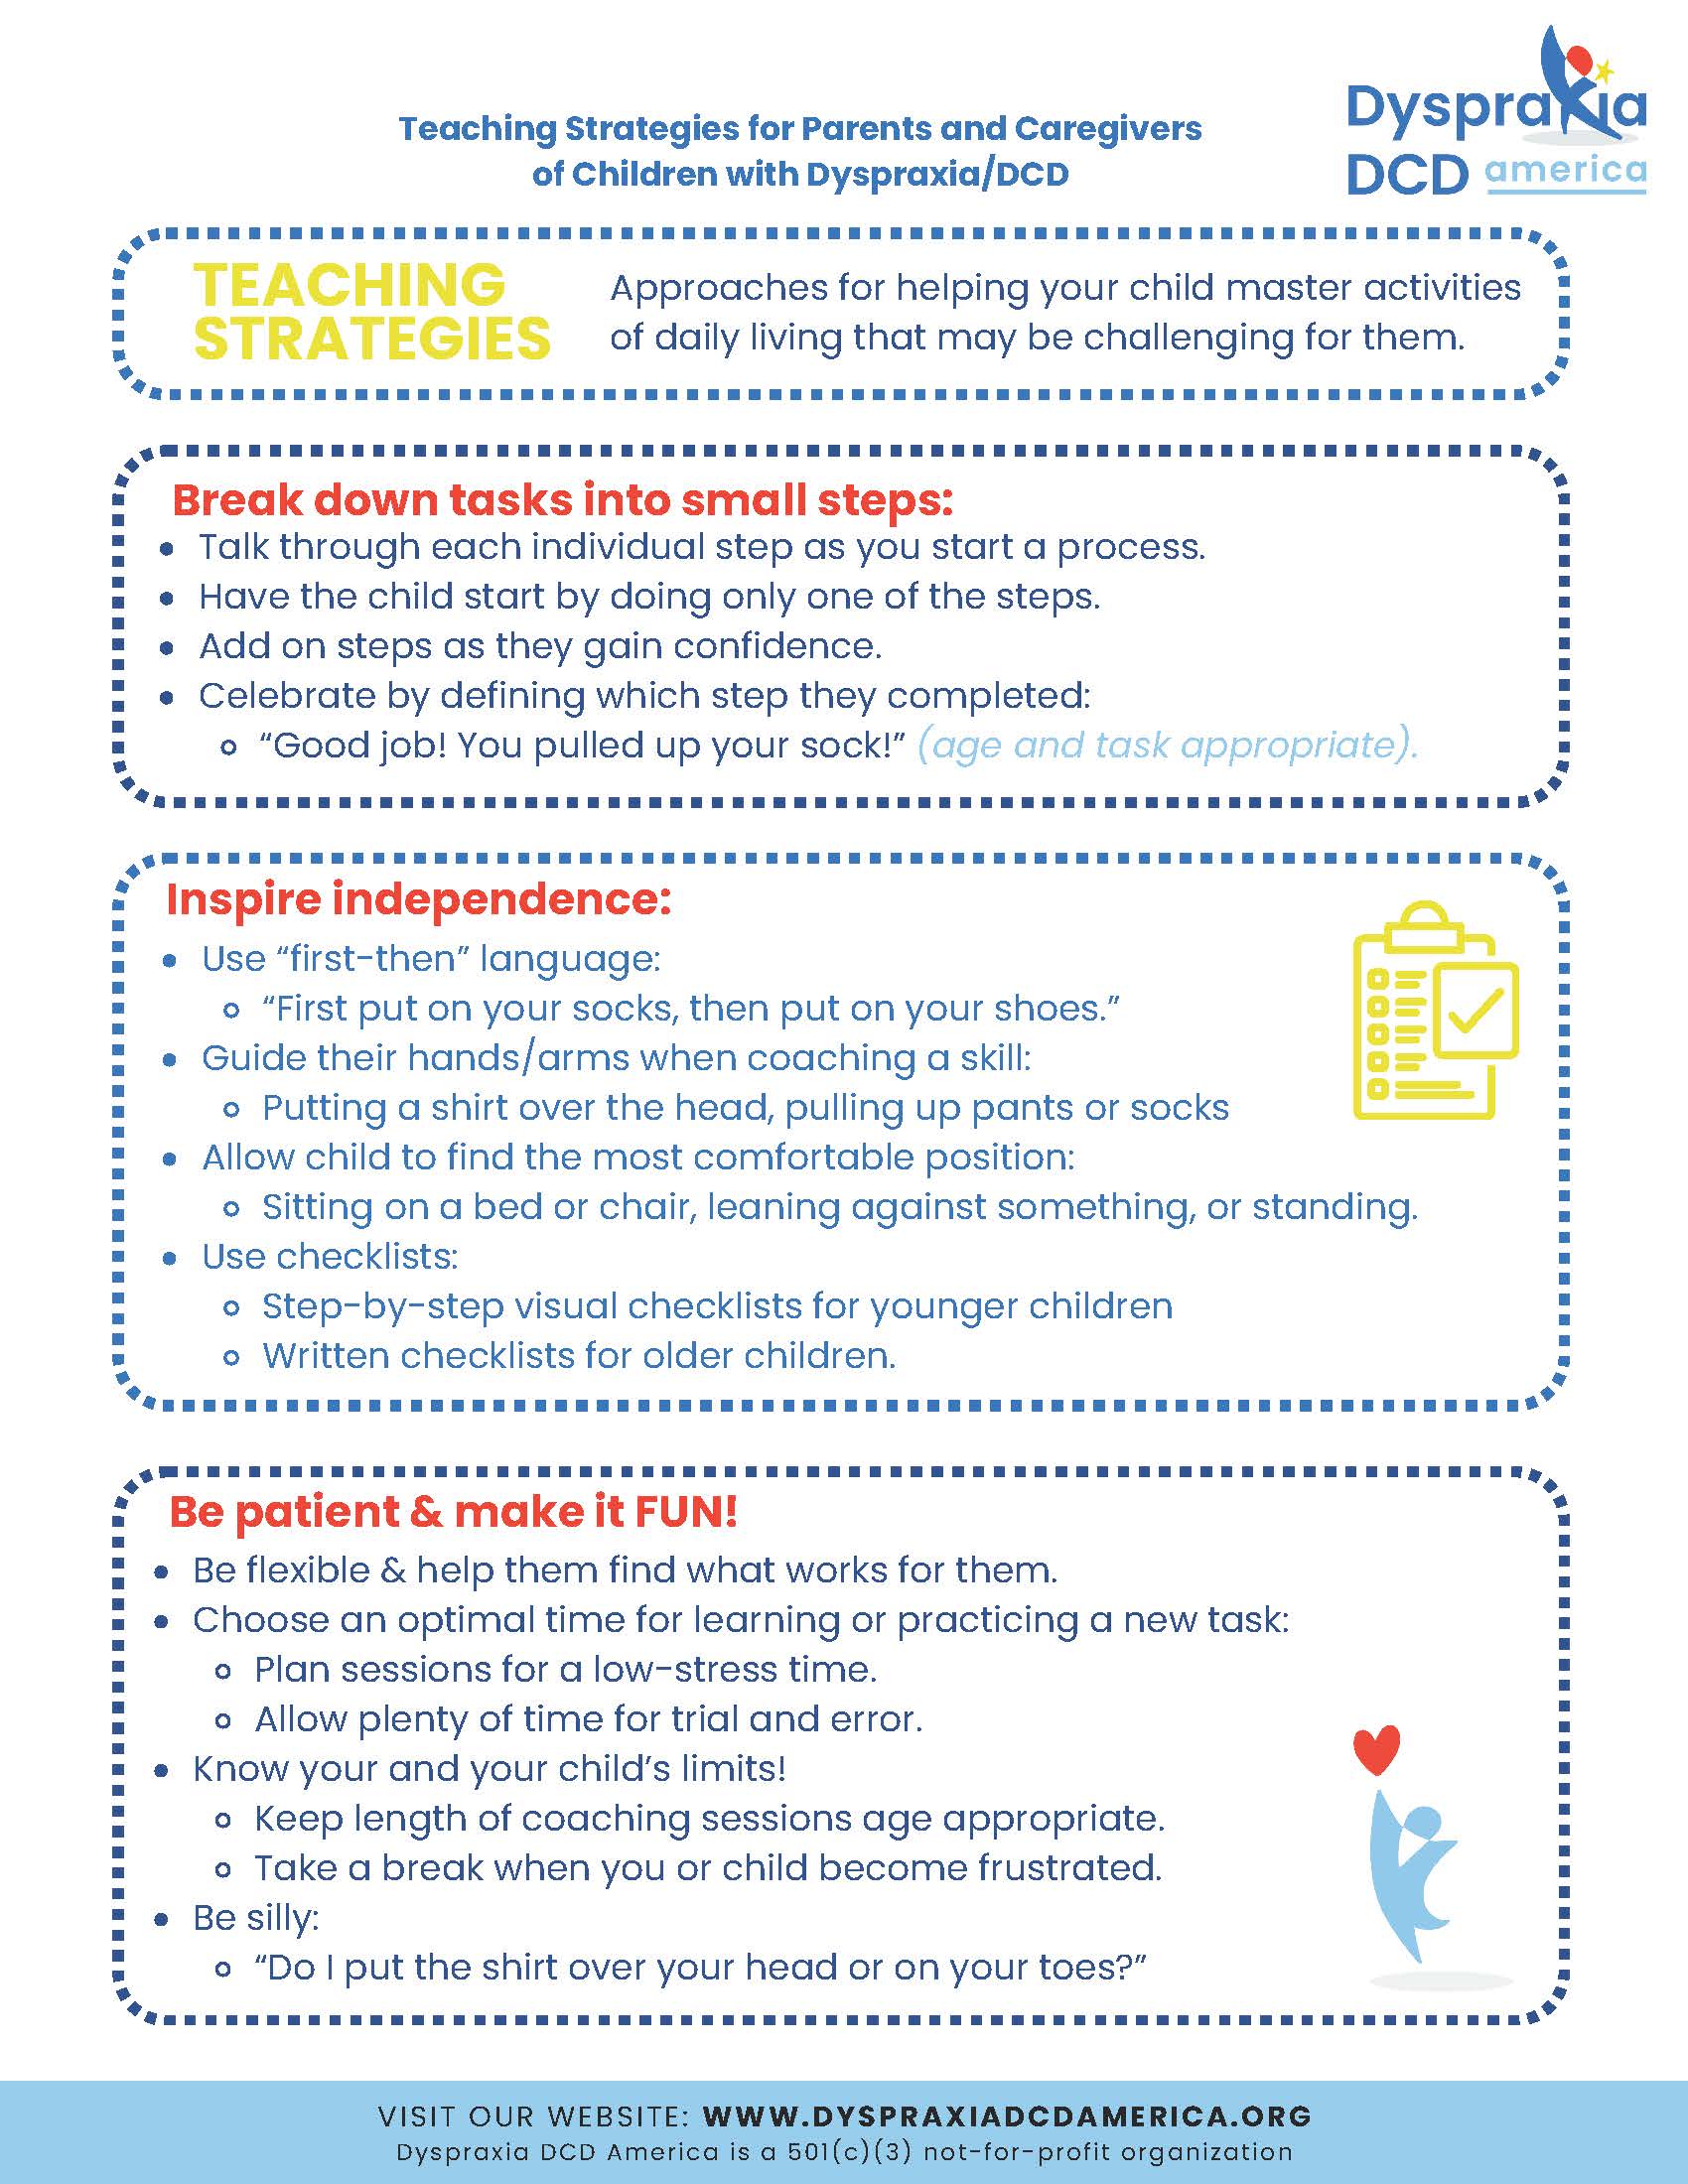 Teaching Strategies for Parents & Caregivers printable